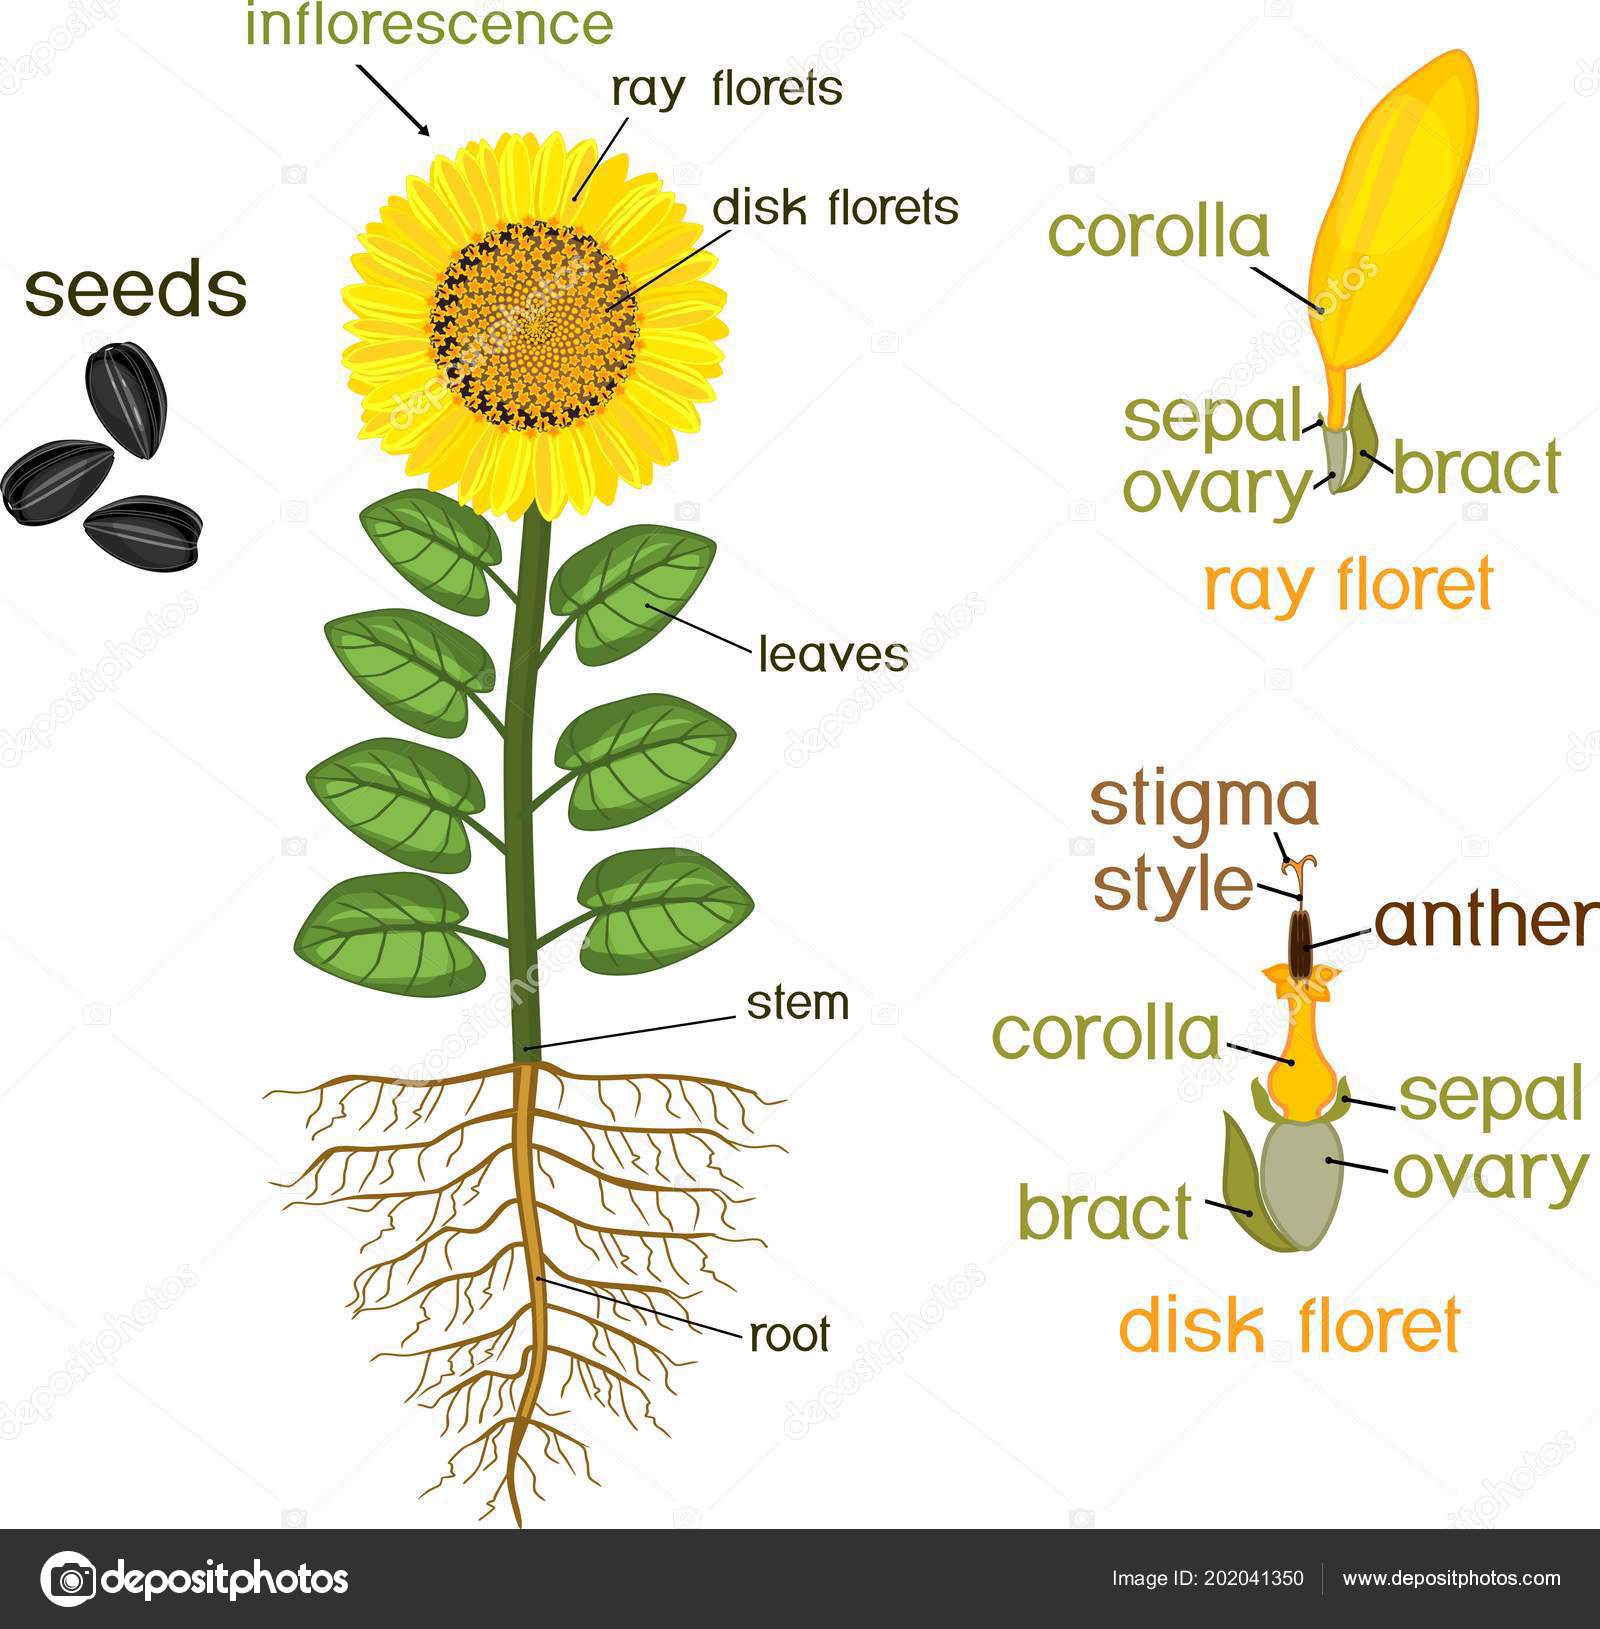 [DIAGRAM] Parts Of A Sunflower Diagram